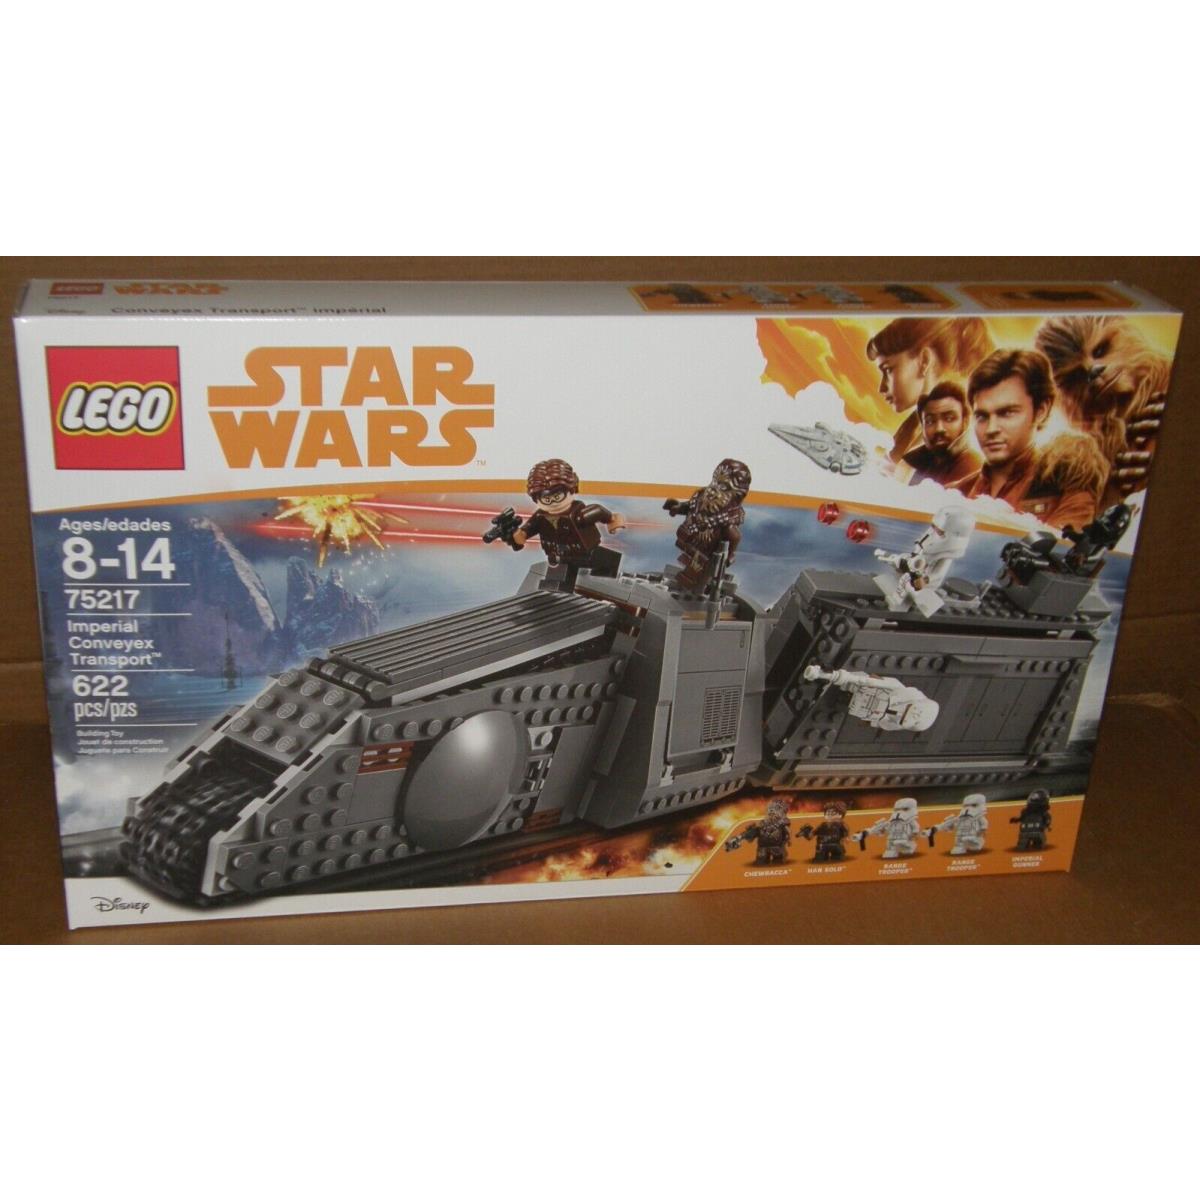 Lego Set 75217 Star Wars Imperial Conveyex Transport 622 Pcs